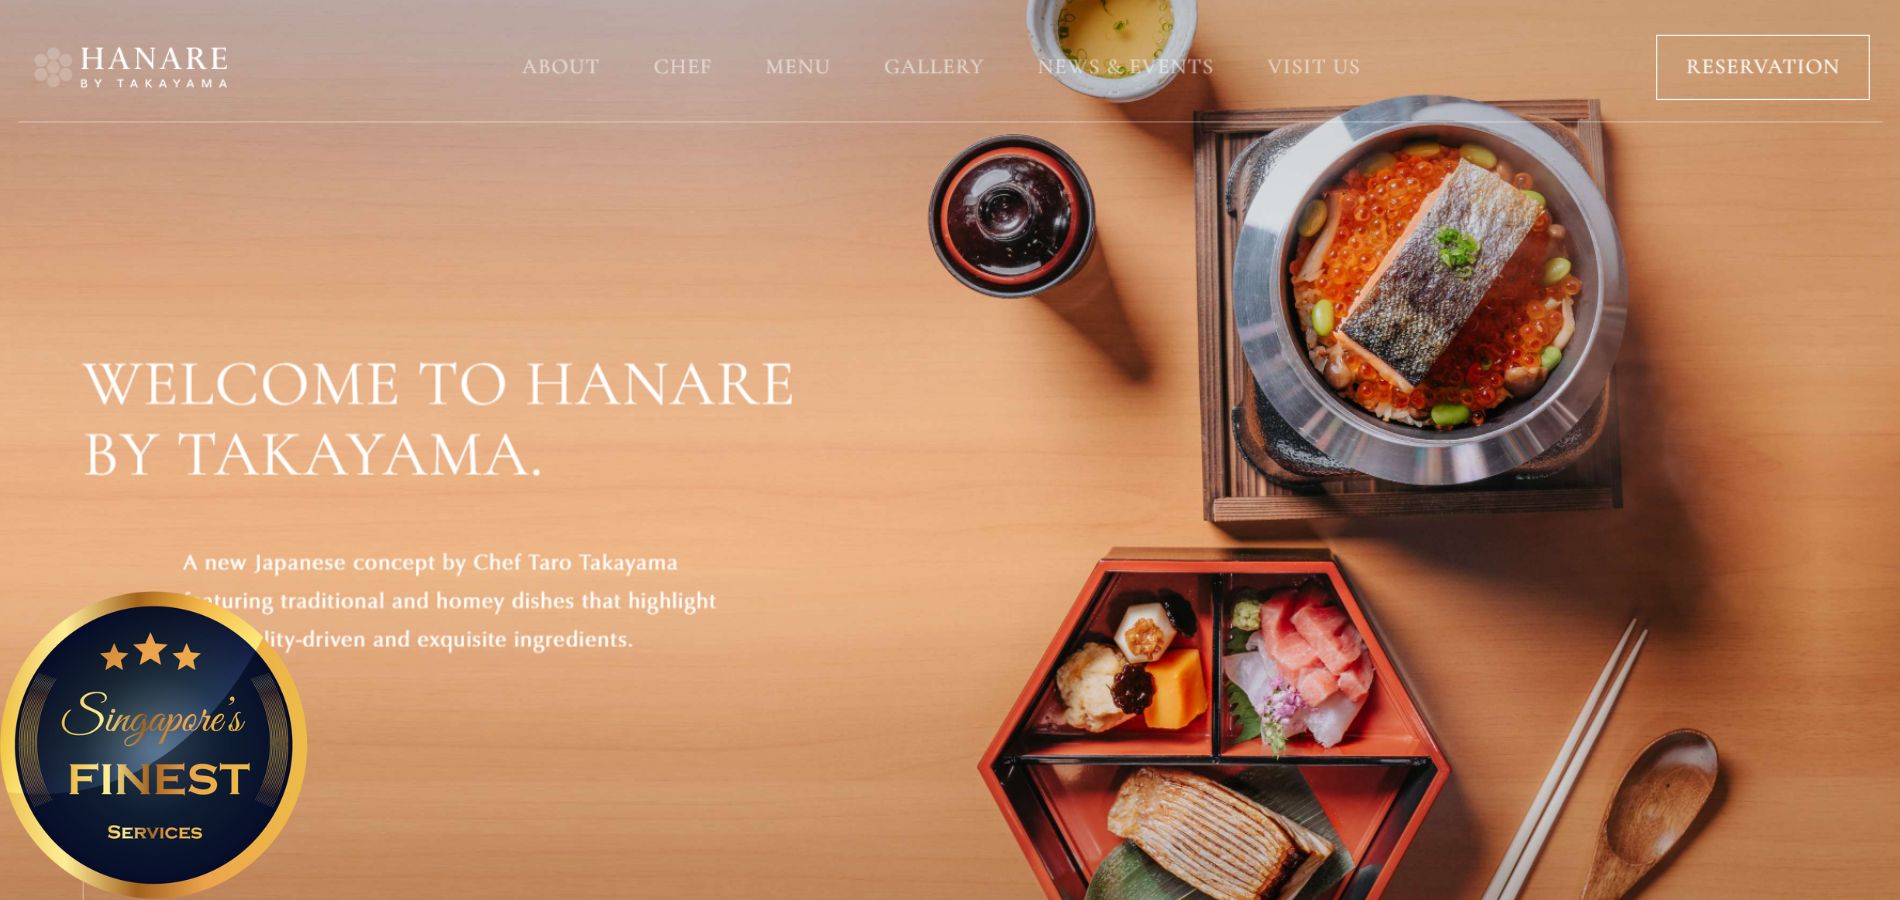 Hanare by Takayama - Bento Box Restaurants Singapore